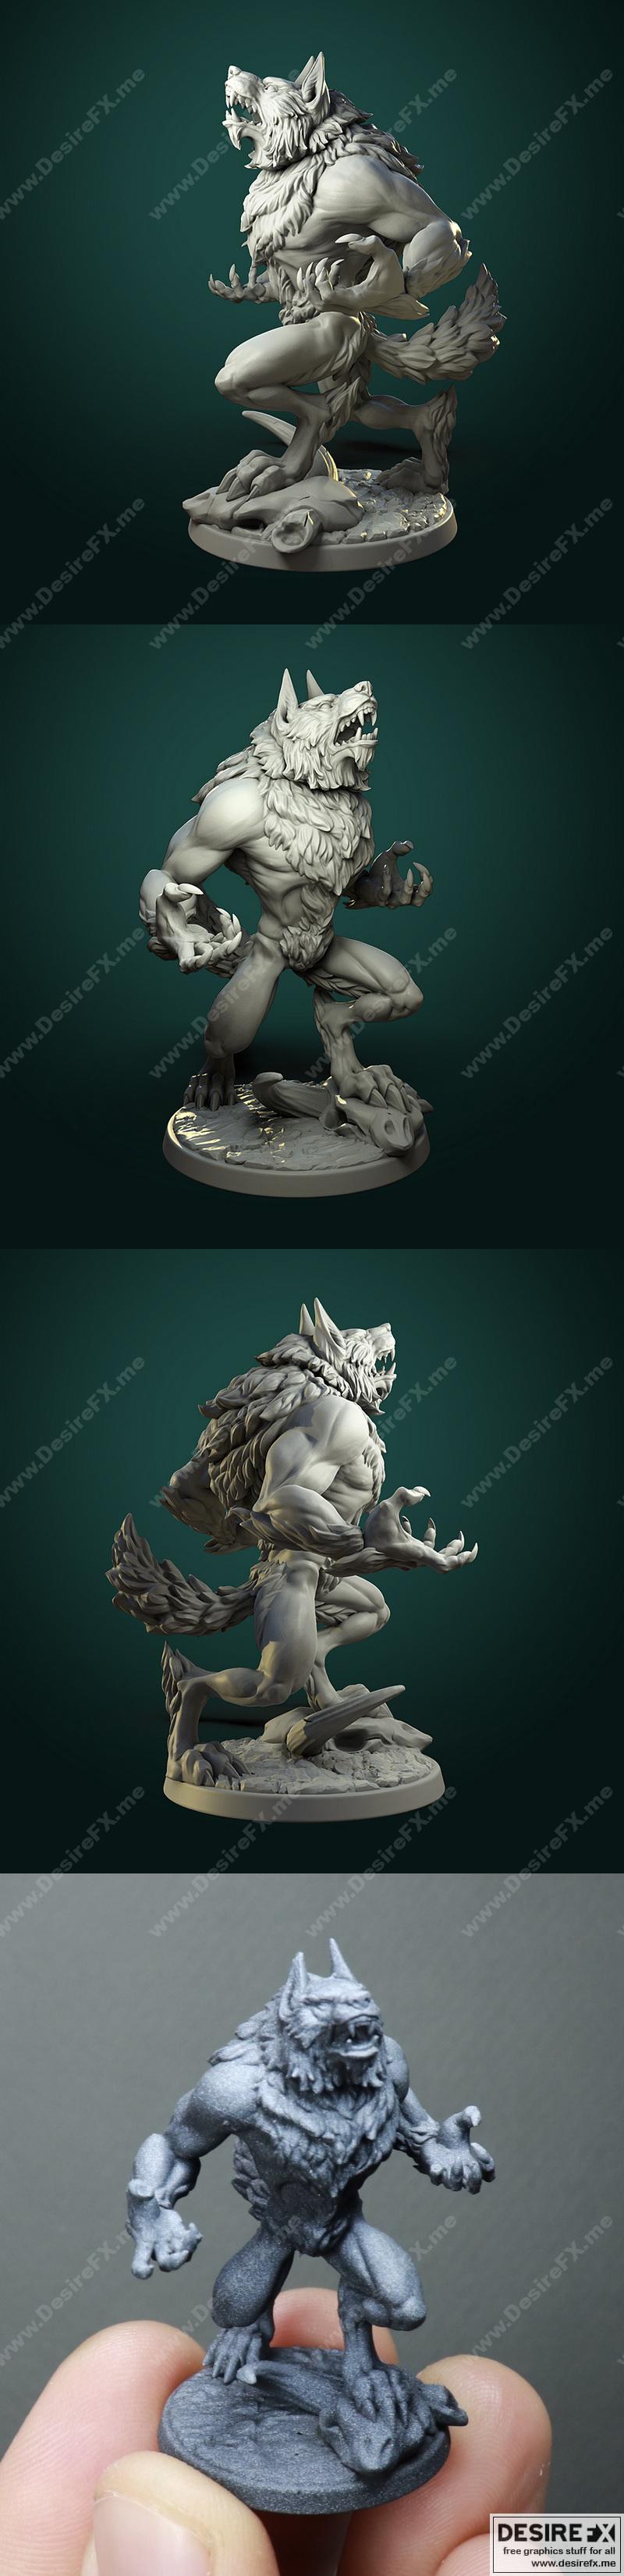 Desire FX 3d models | White Werewolf Tavern – Furious Werewolf V1 – 3D ...